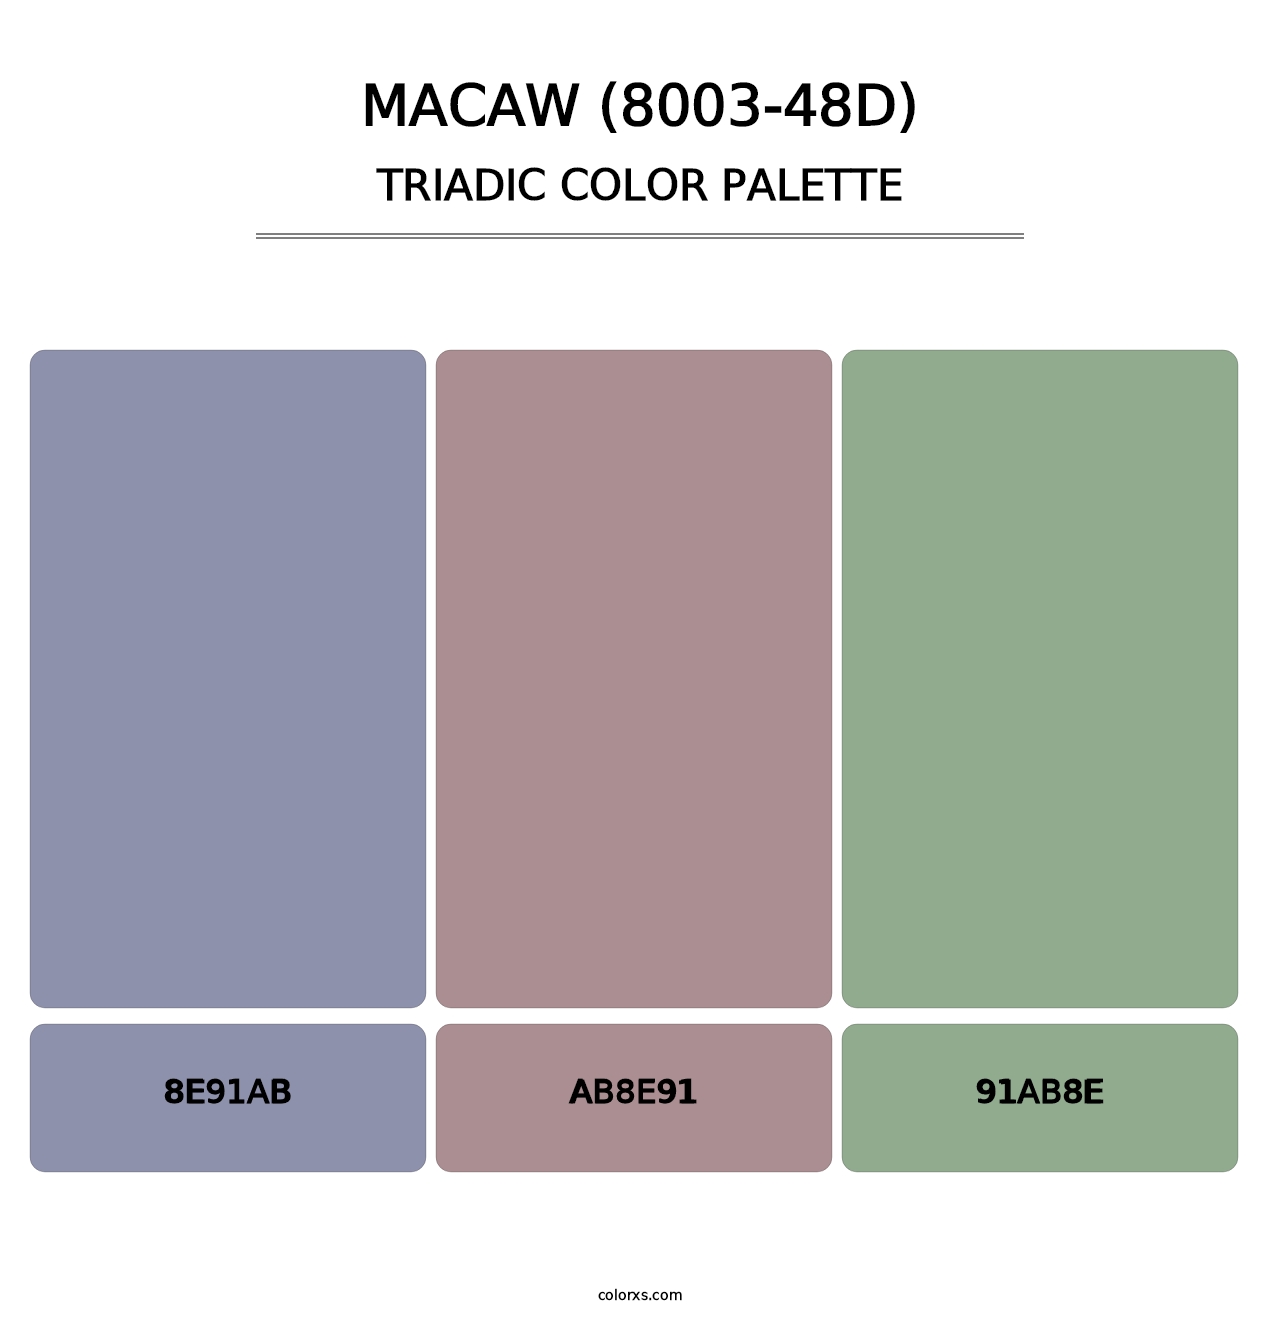 Macaw (8003-48D) - Triadic Color Palette